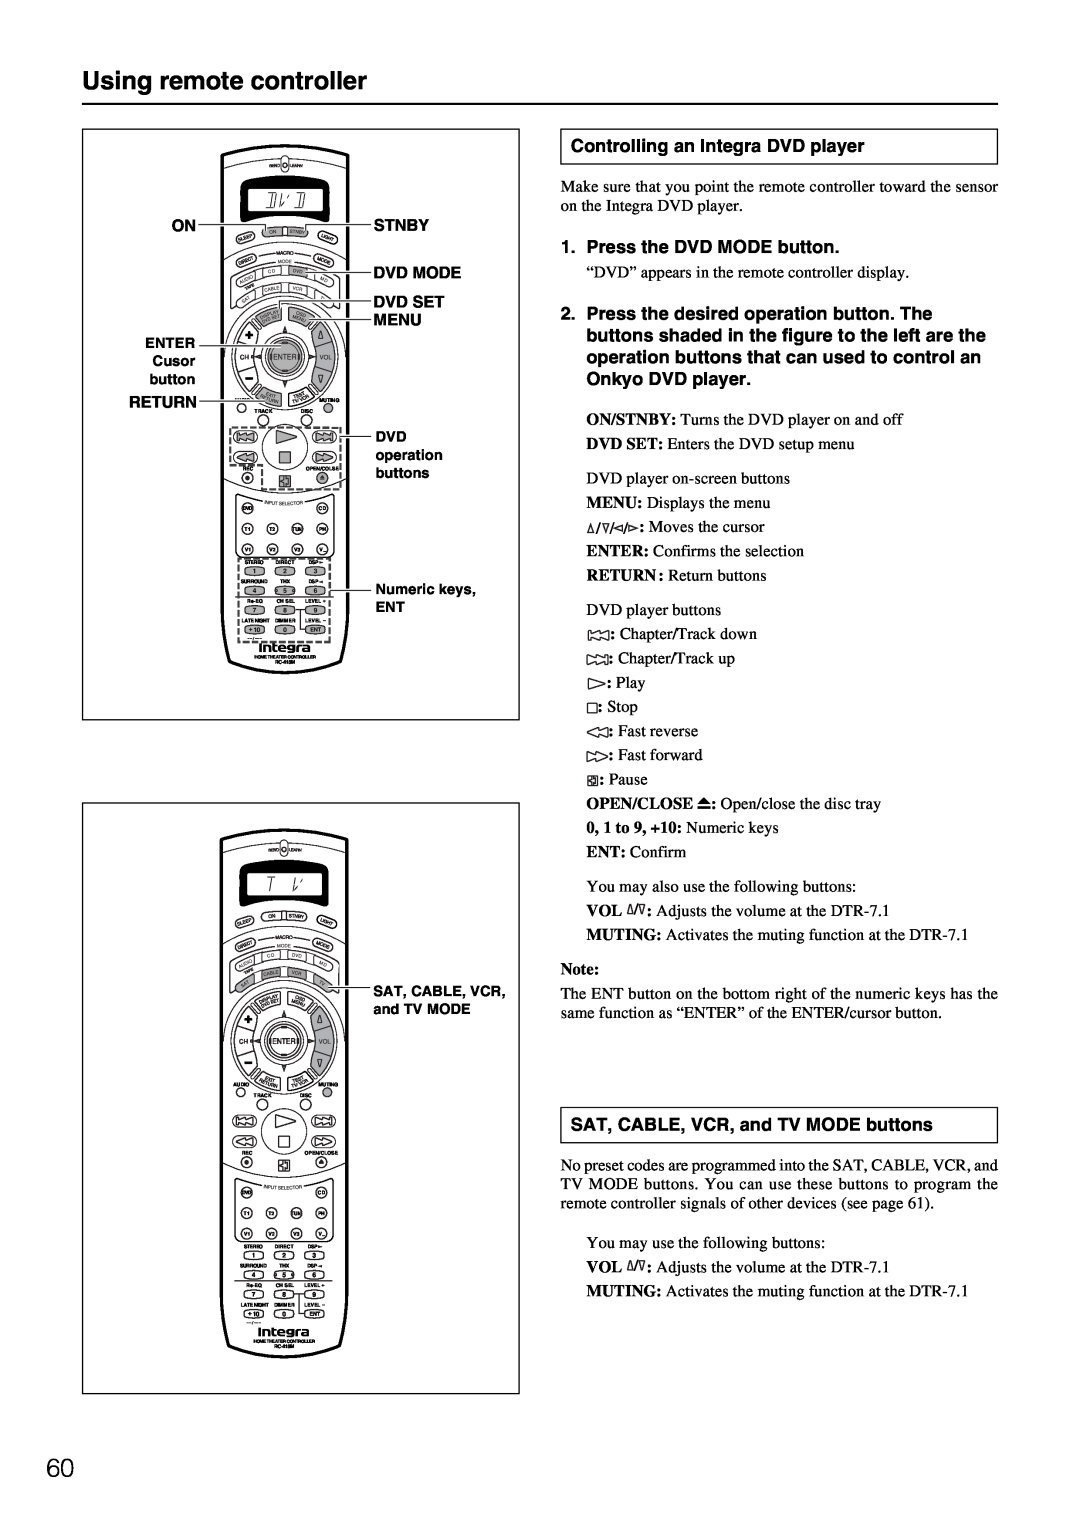 Integra DTR-7.1 appendix Using remote controller, Controlling an Integra DVD player, Press the DVD MODE button, Return 